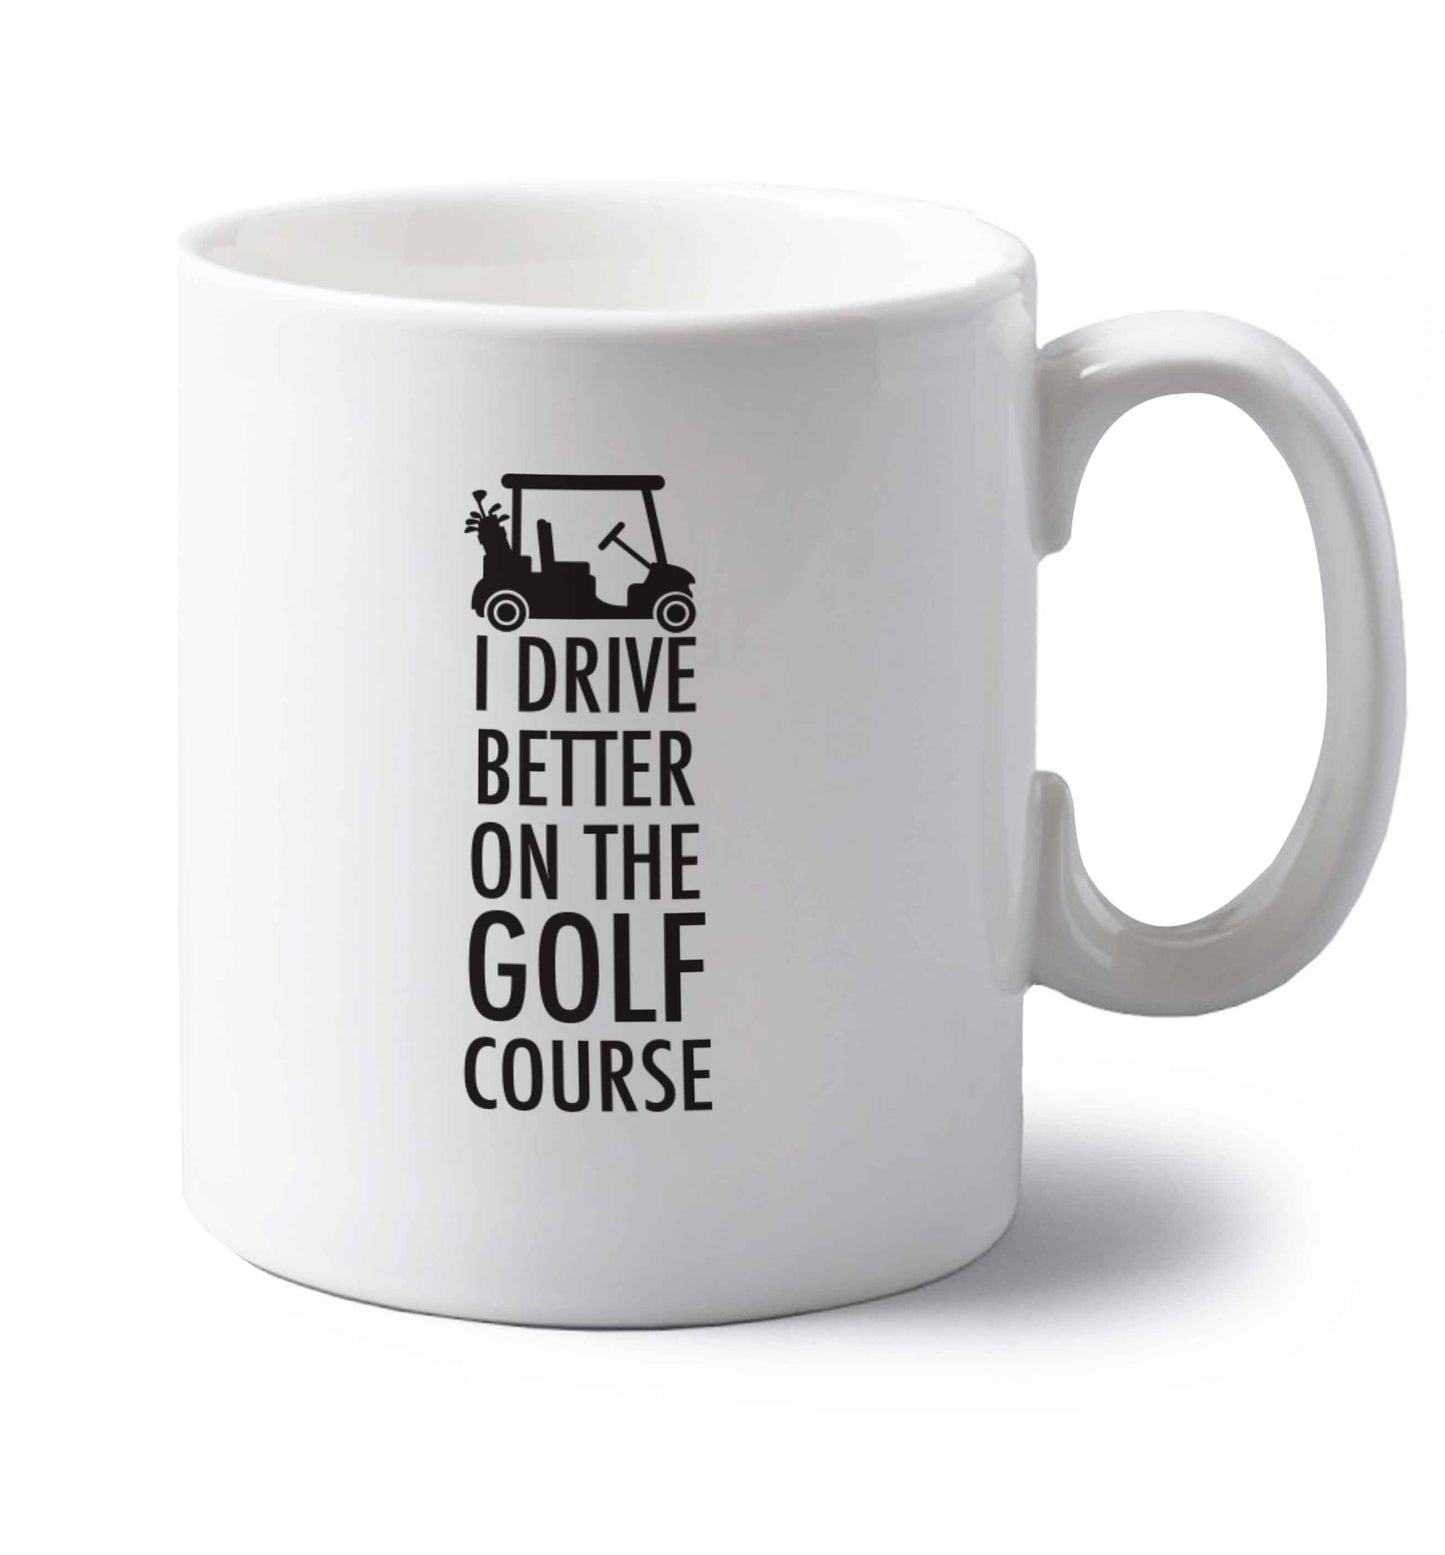 I drive better on the golf course left handed white ceramic mug 